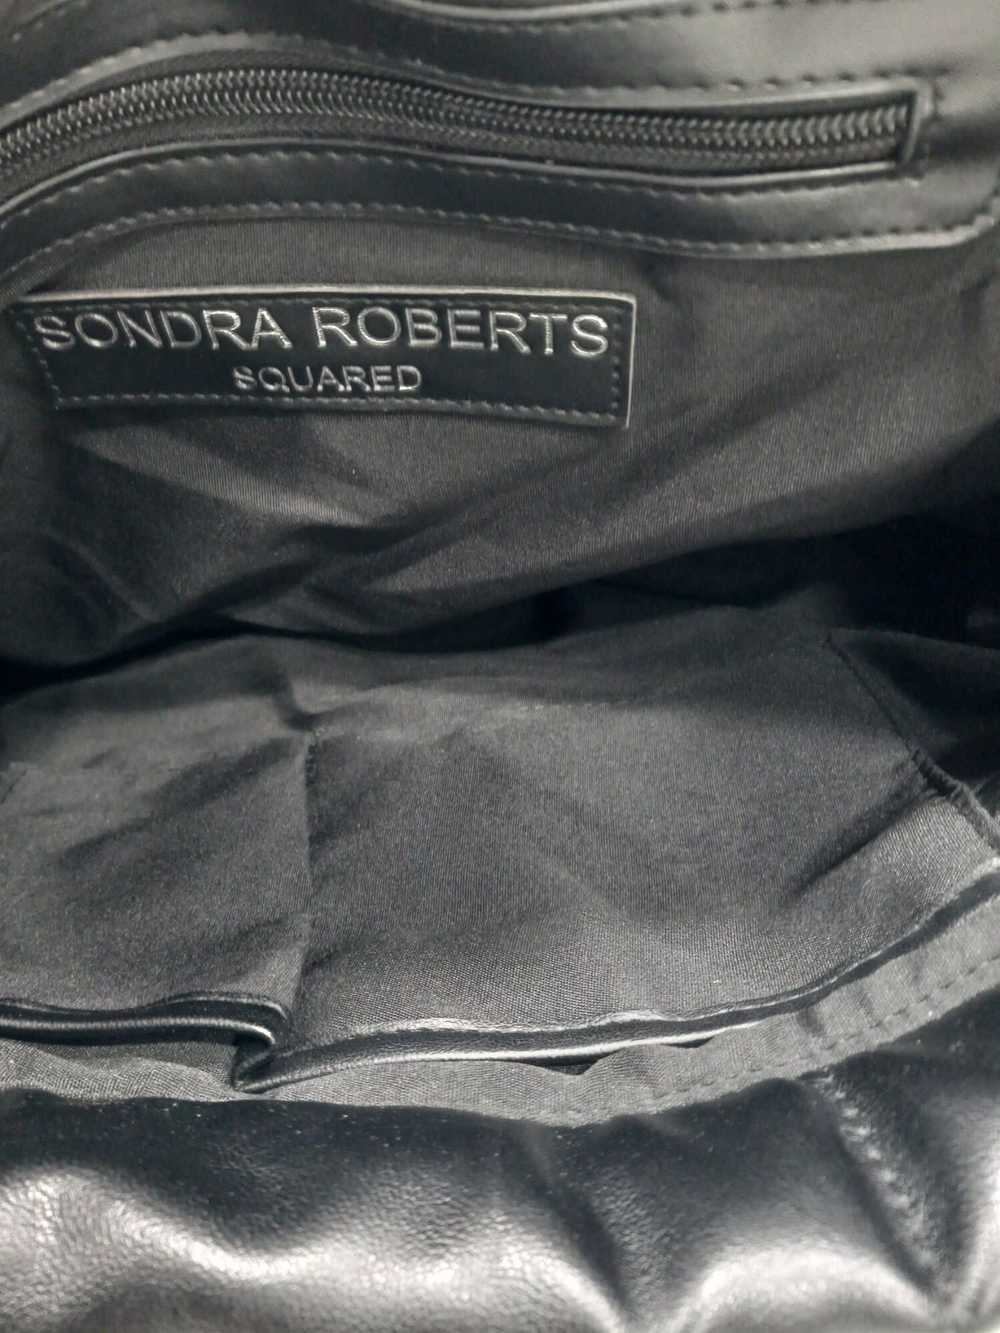 Sondra Roberts Women's Black Leather Purse - image 4